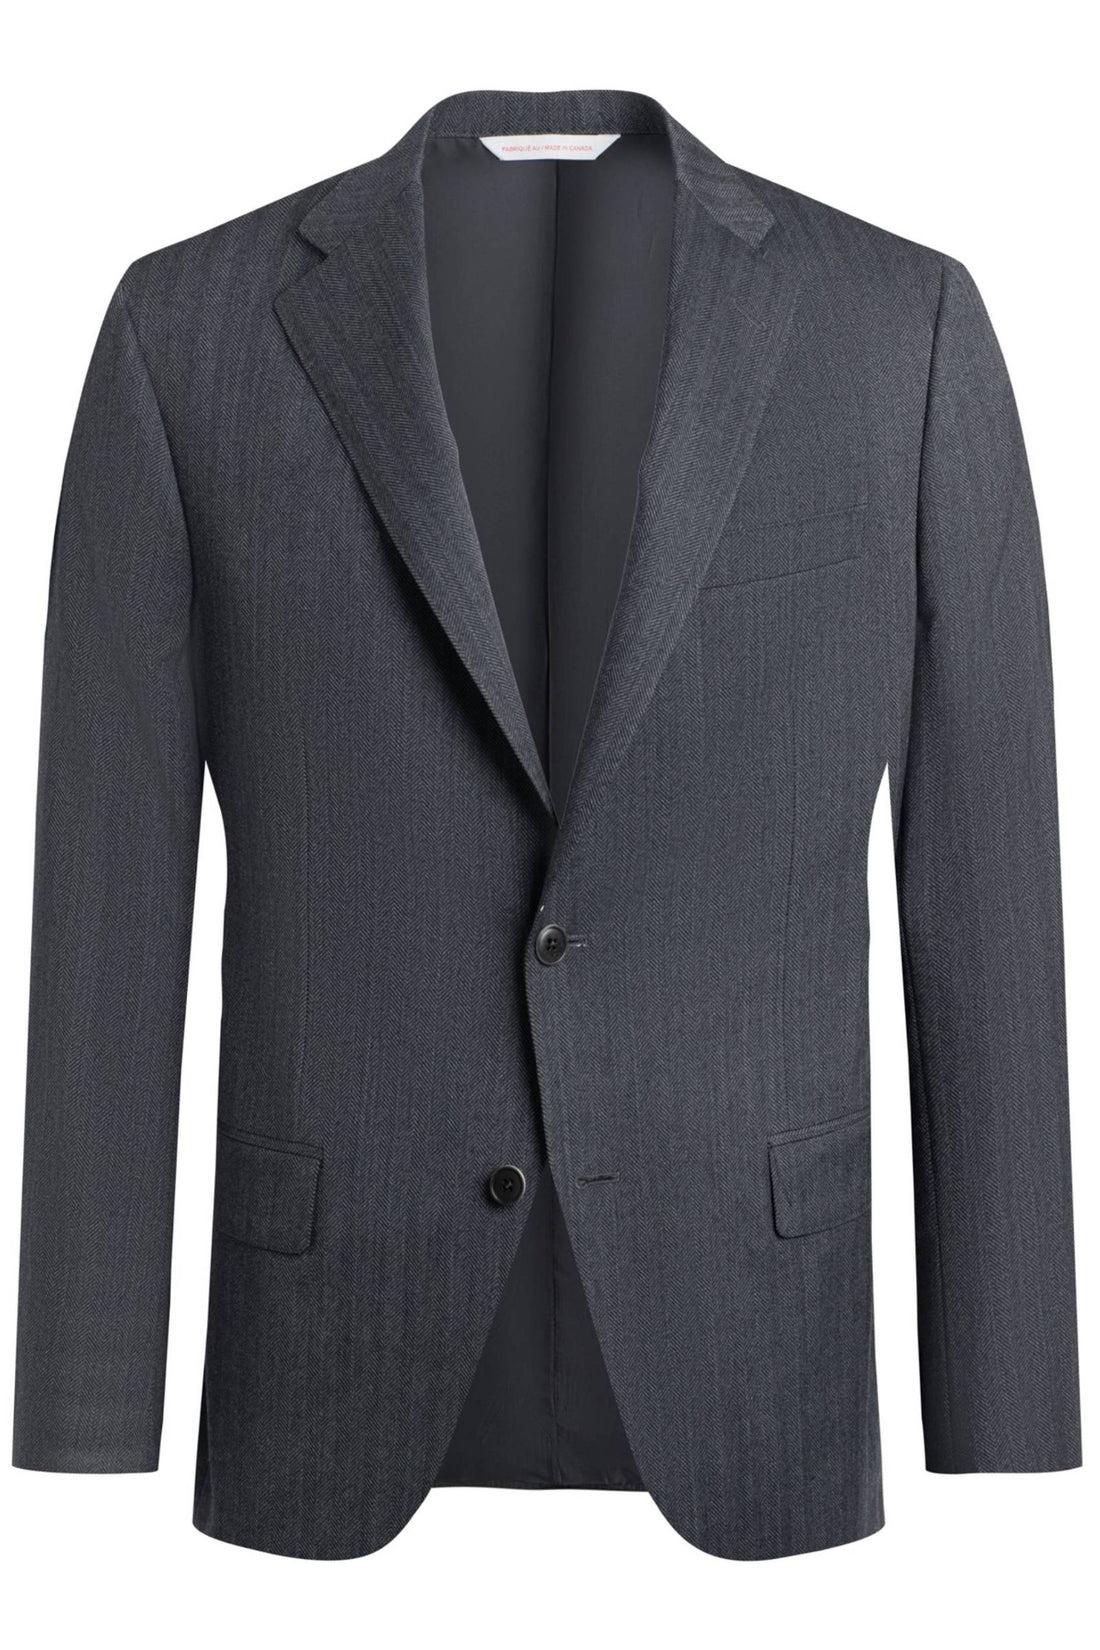 Samuelsohn Charcoal Herringbone Soft Classic Fit Jacket